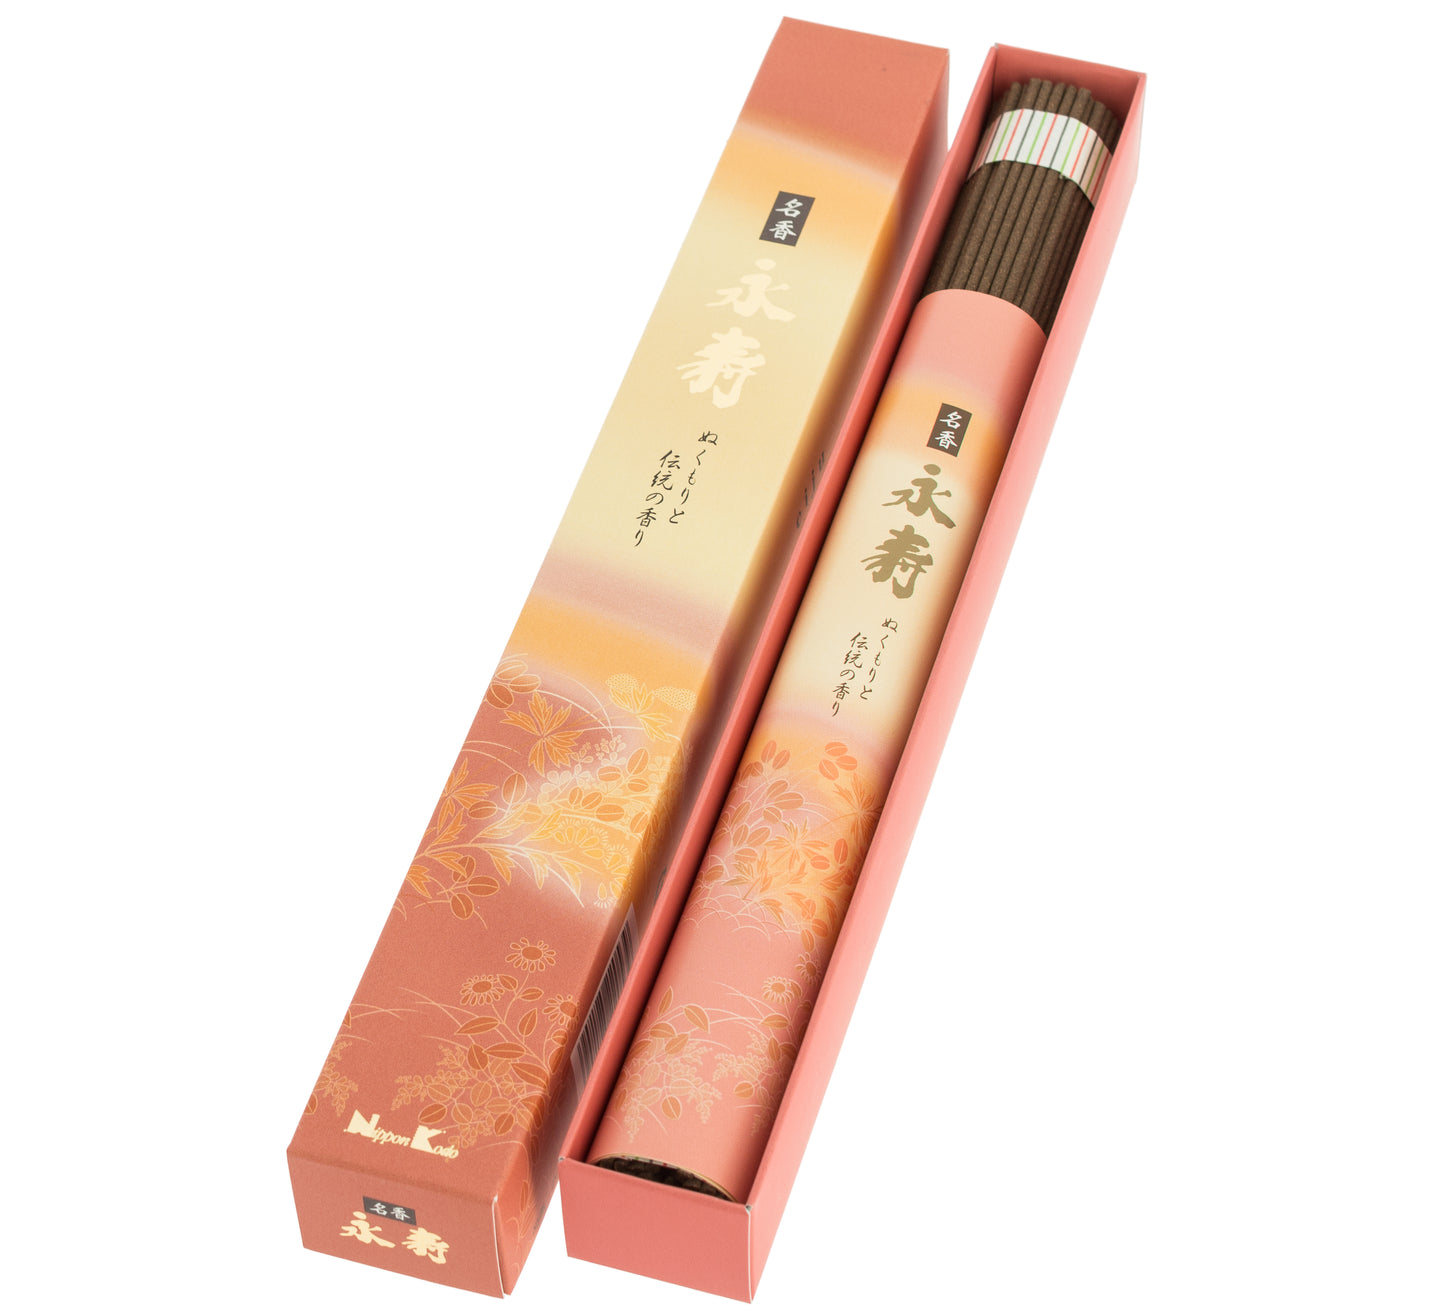 Eiju Meiko Incense - Cinnamon & Amber, Long Sticks